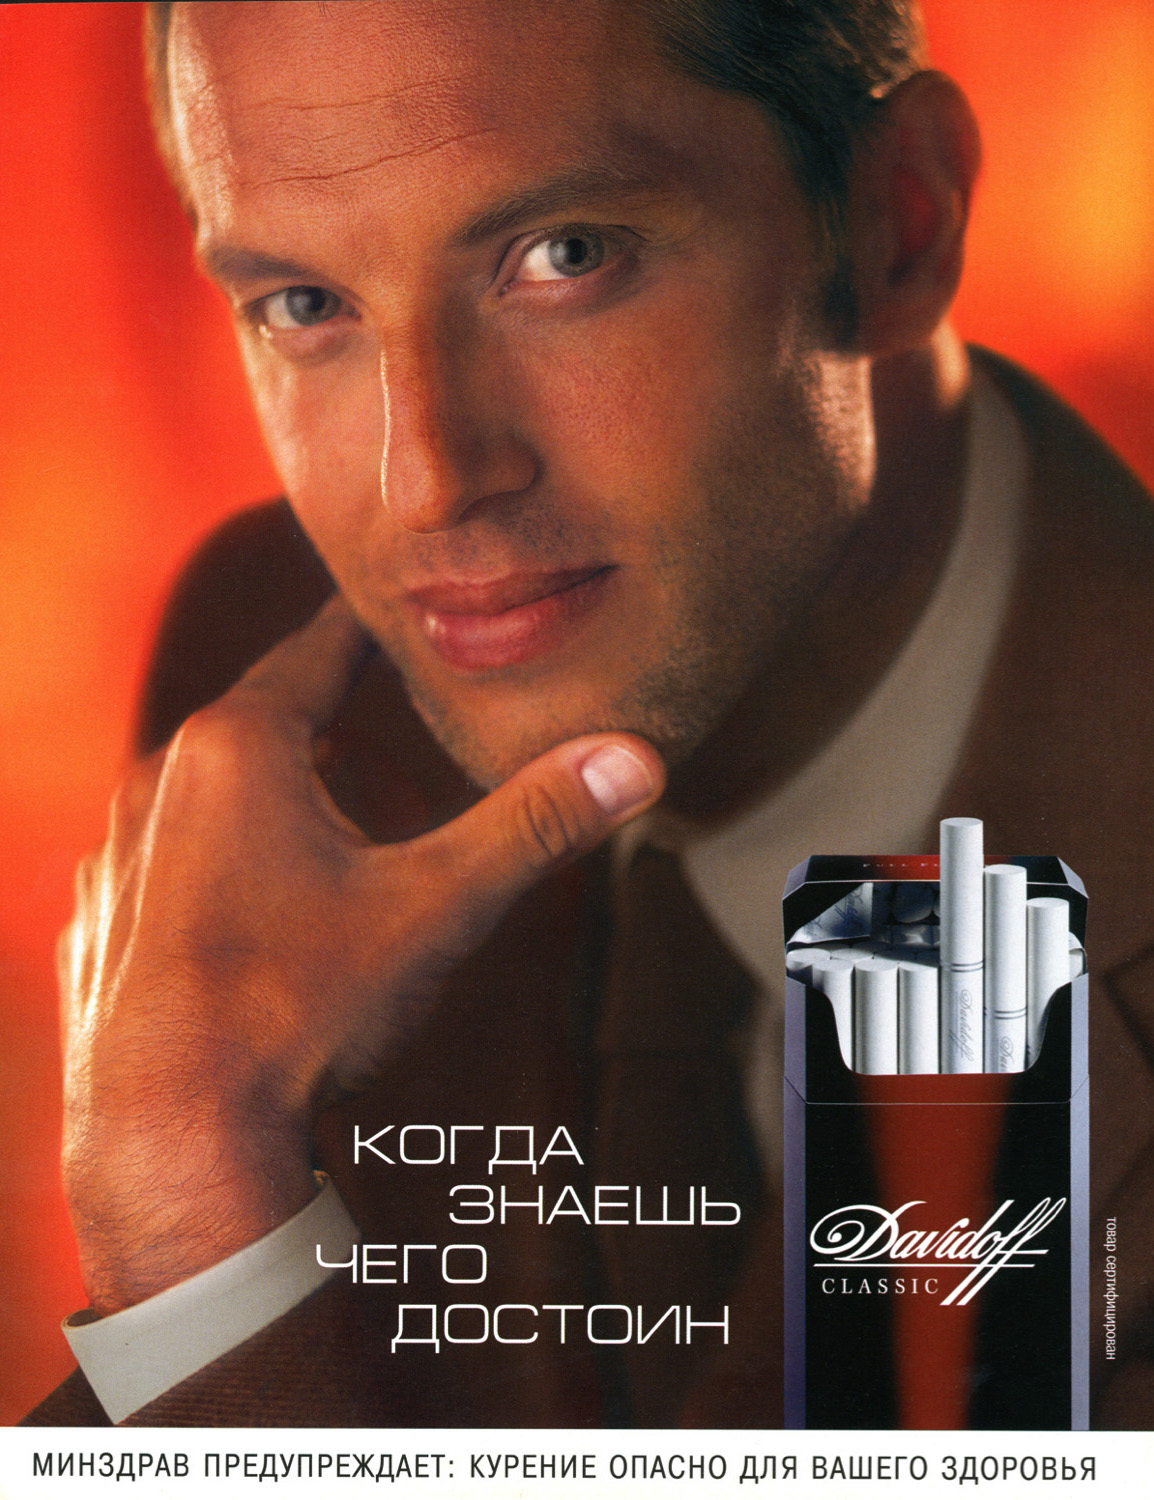 Маркетинг табак. Реклама сигарет. Современная реклама сигарет. Реклама сигарет Российская. Реклама Davidoff.